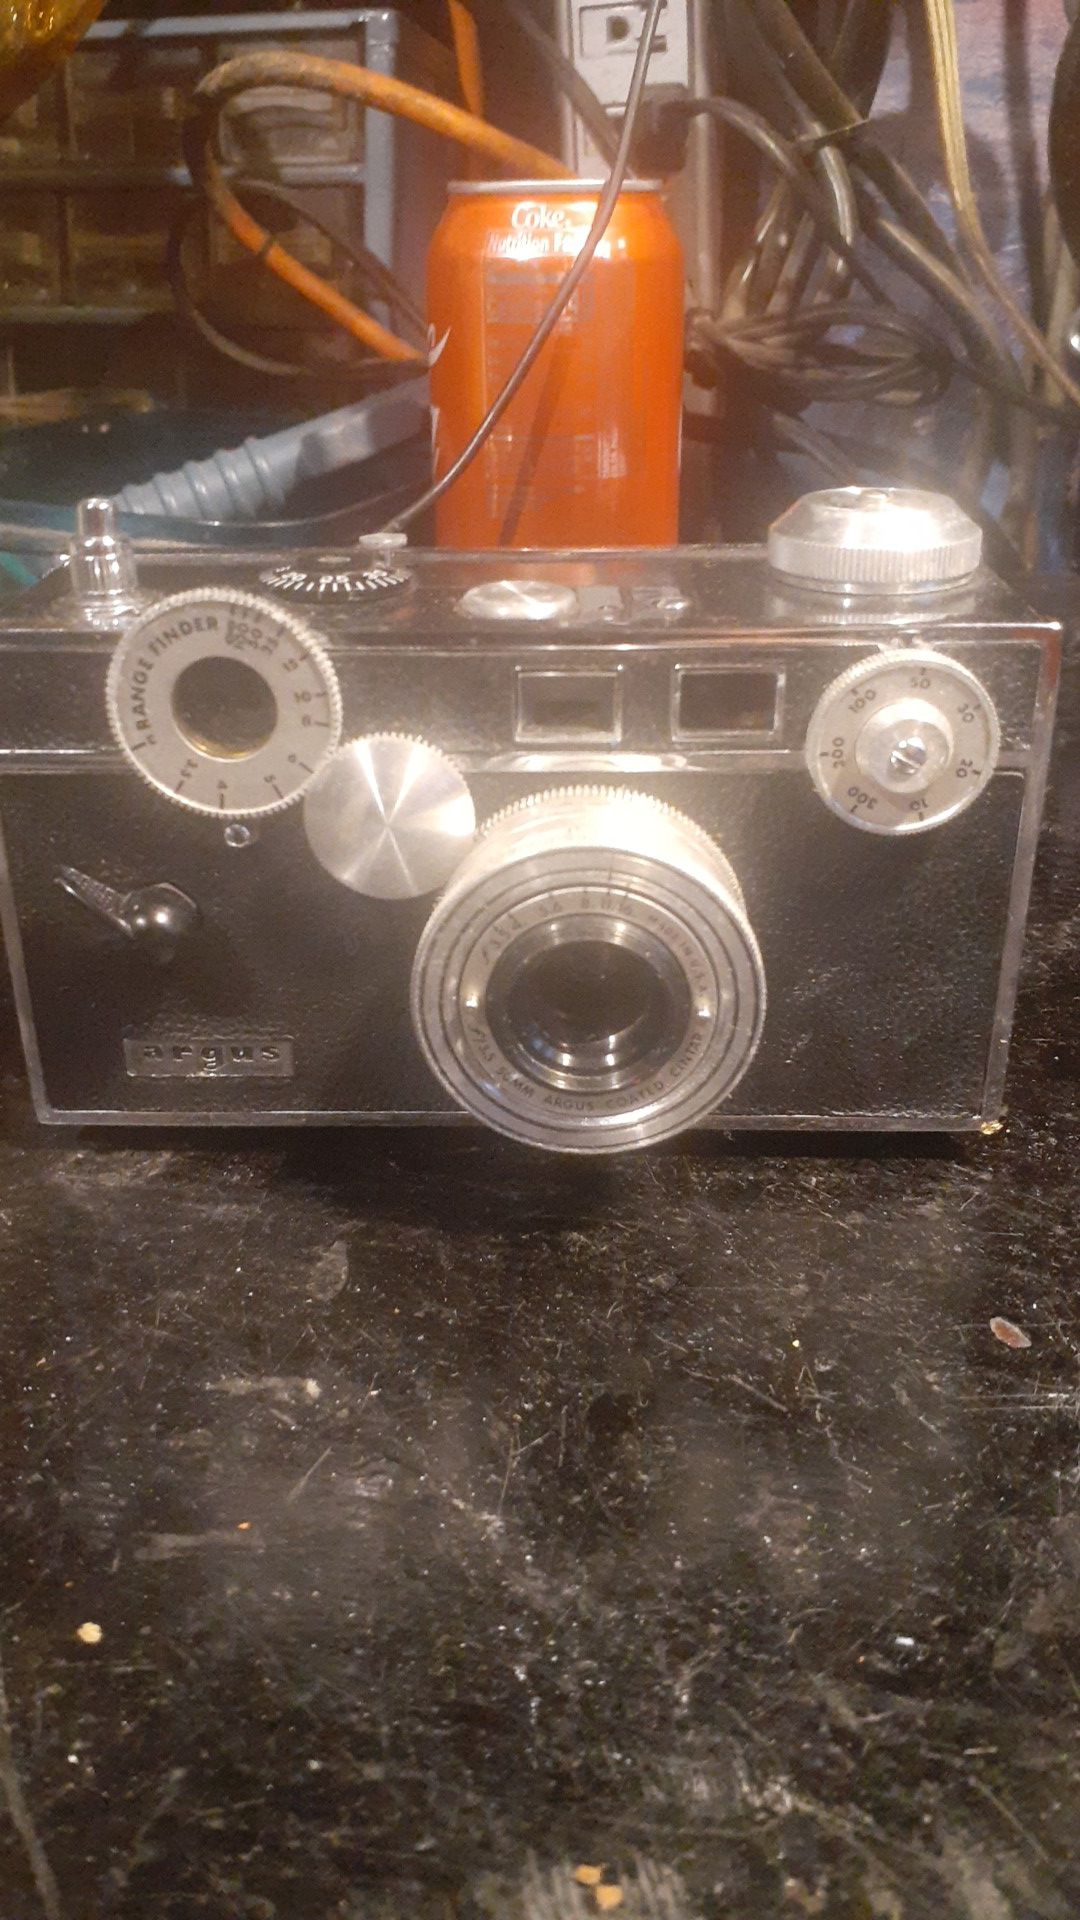 Vintage Argus 35 camera